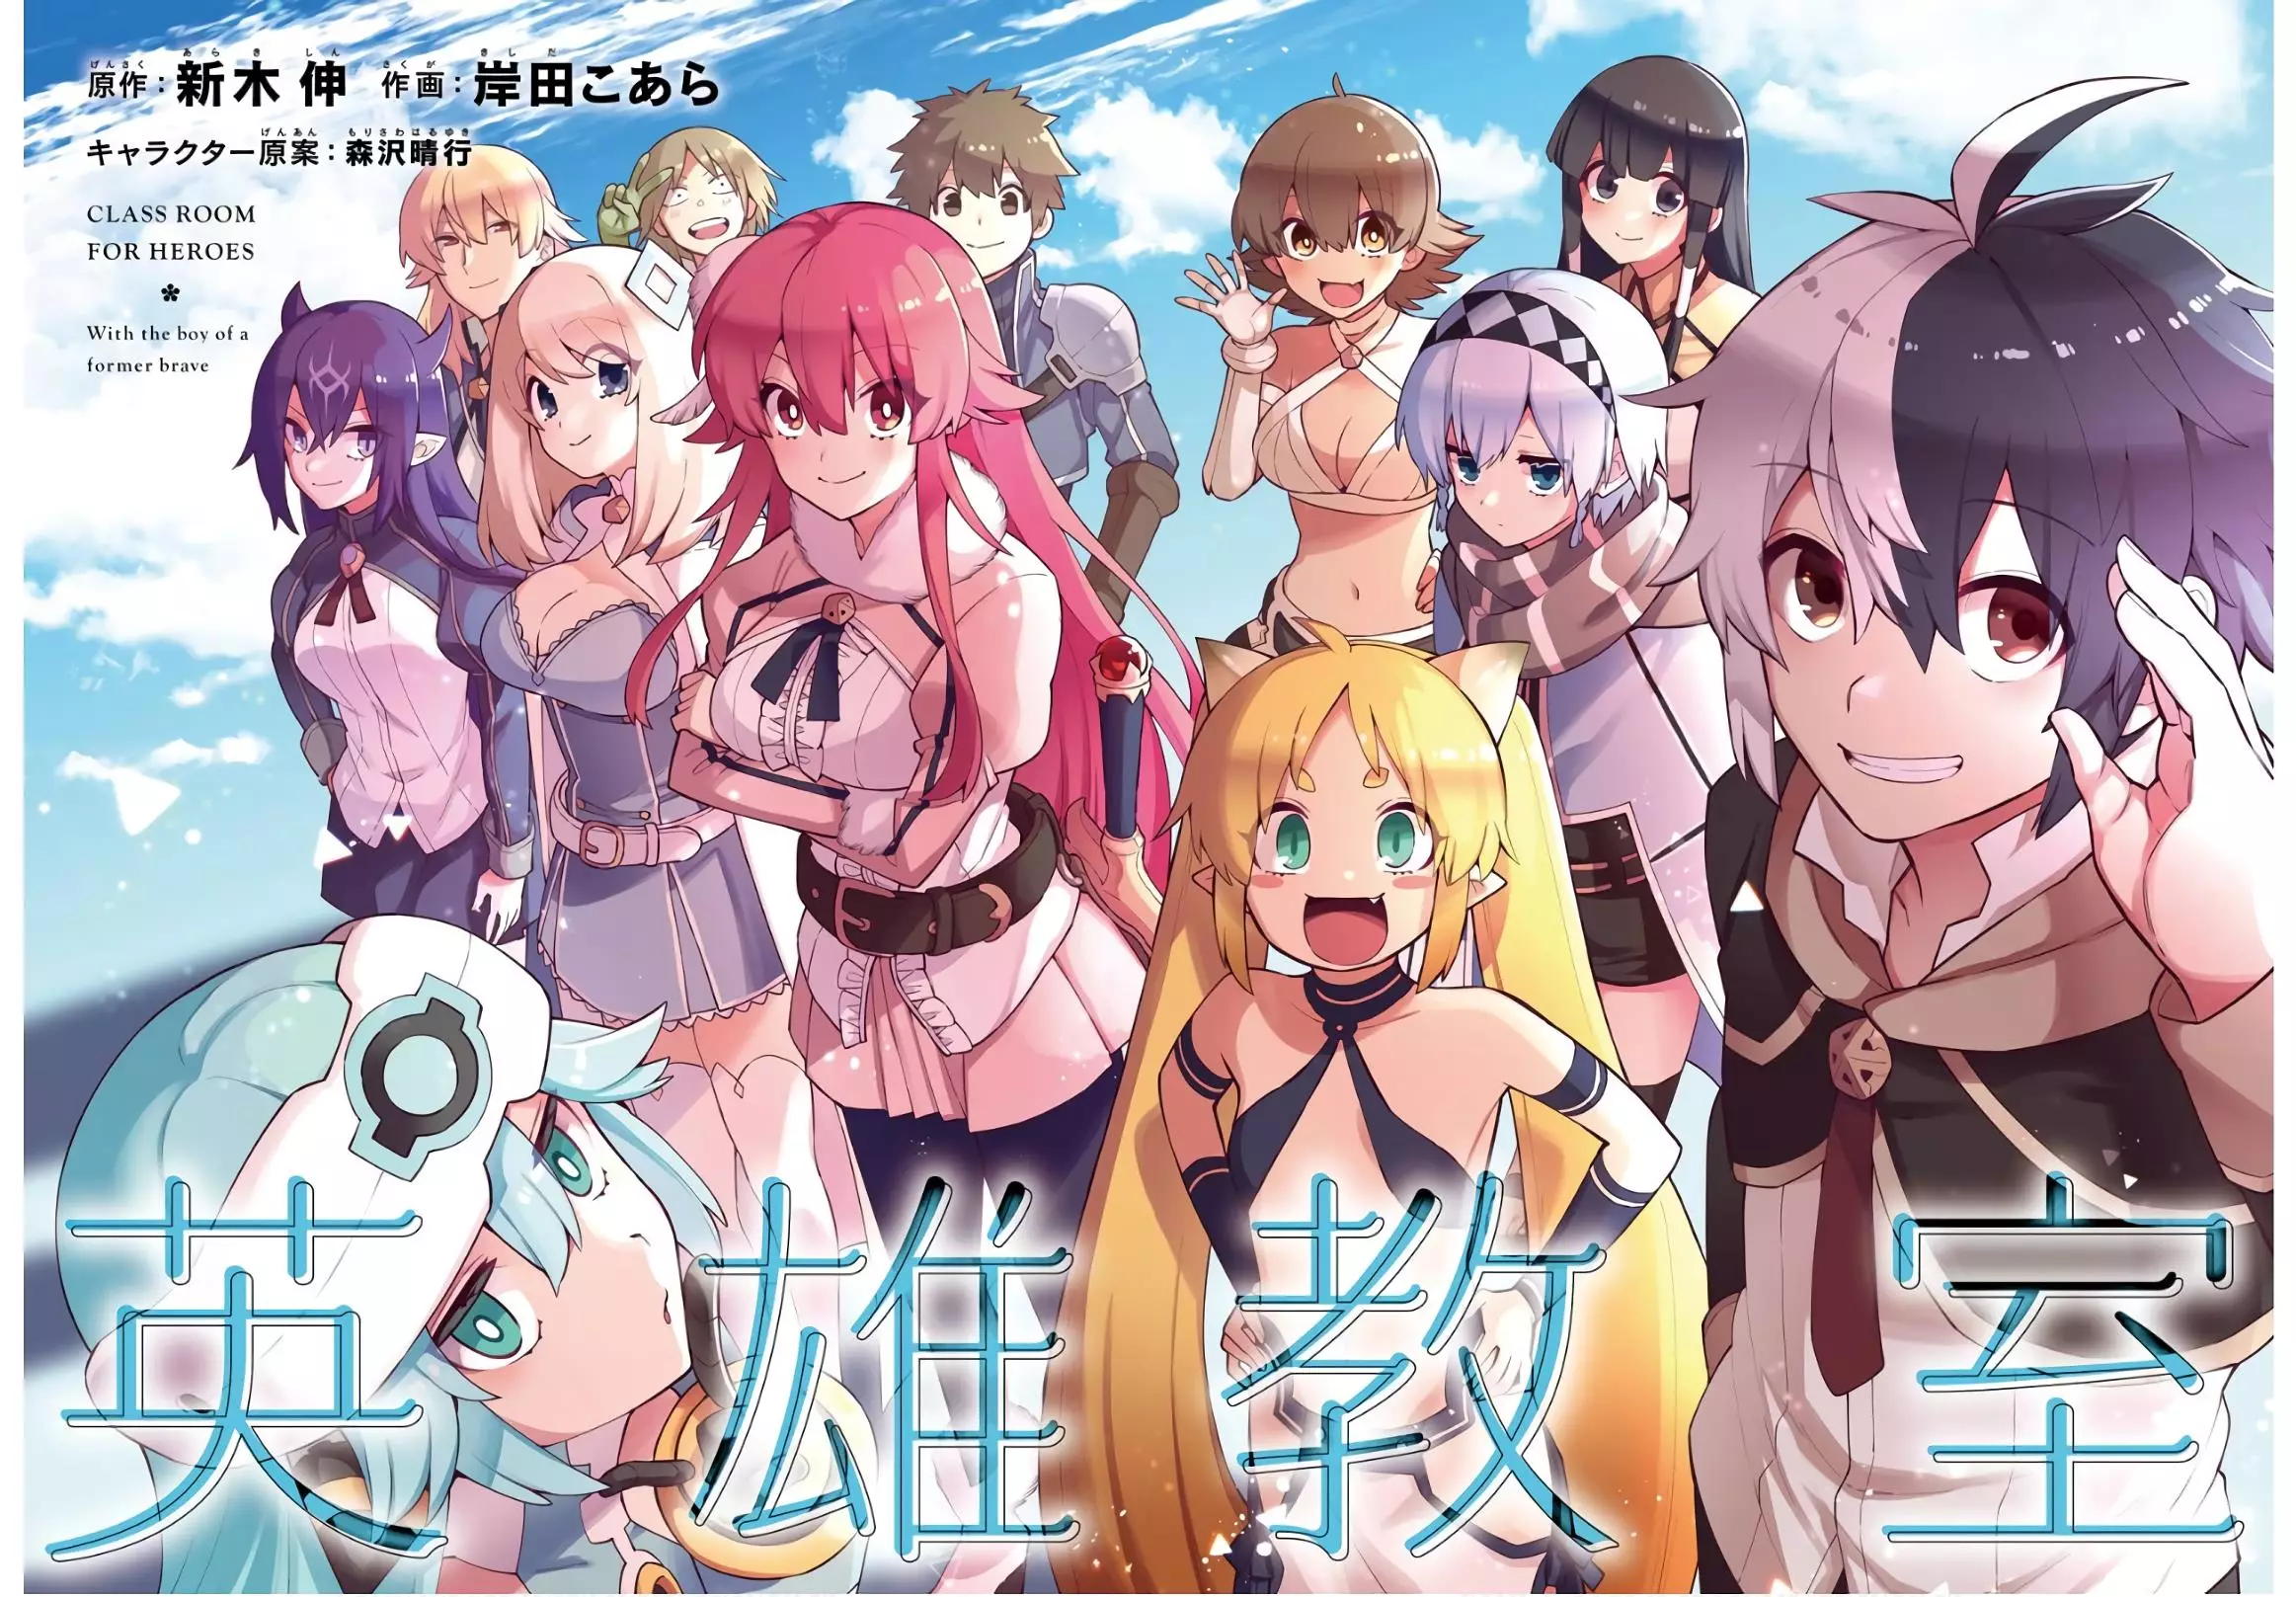  Eiyuu Kyoushitsu Poster Classroom for Heroes Anime